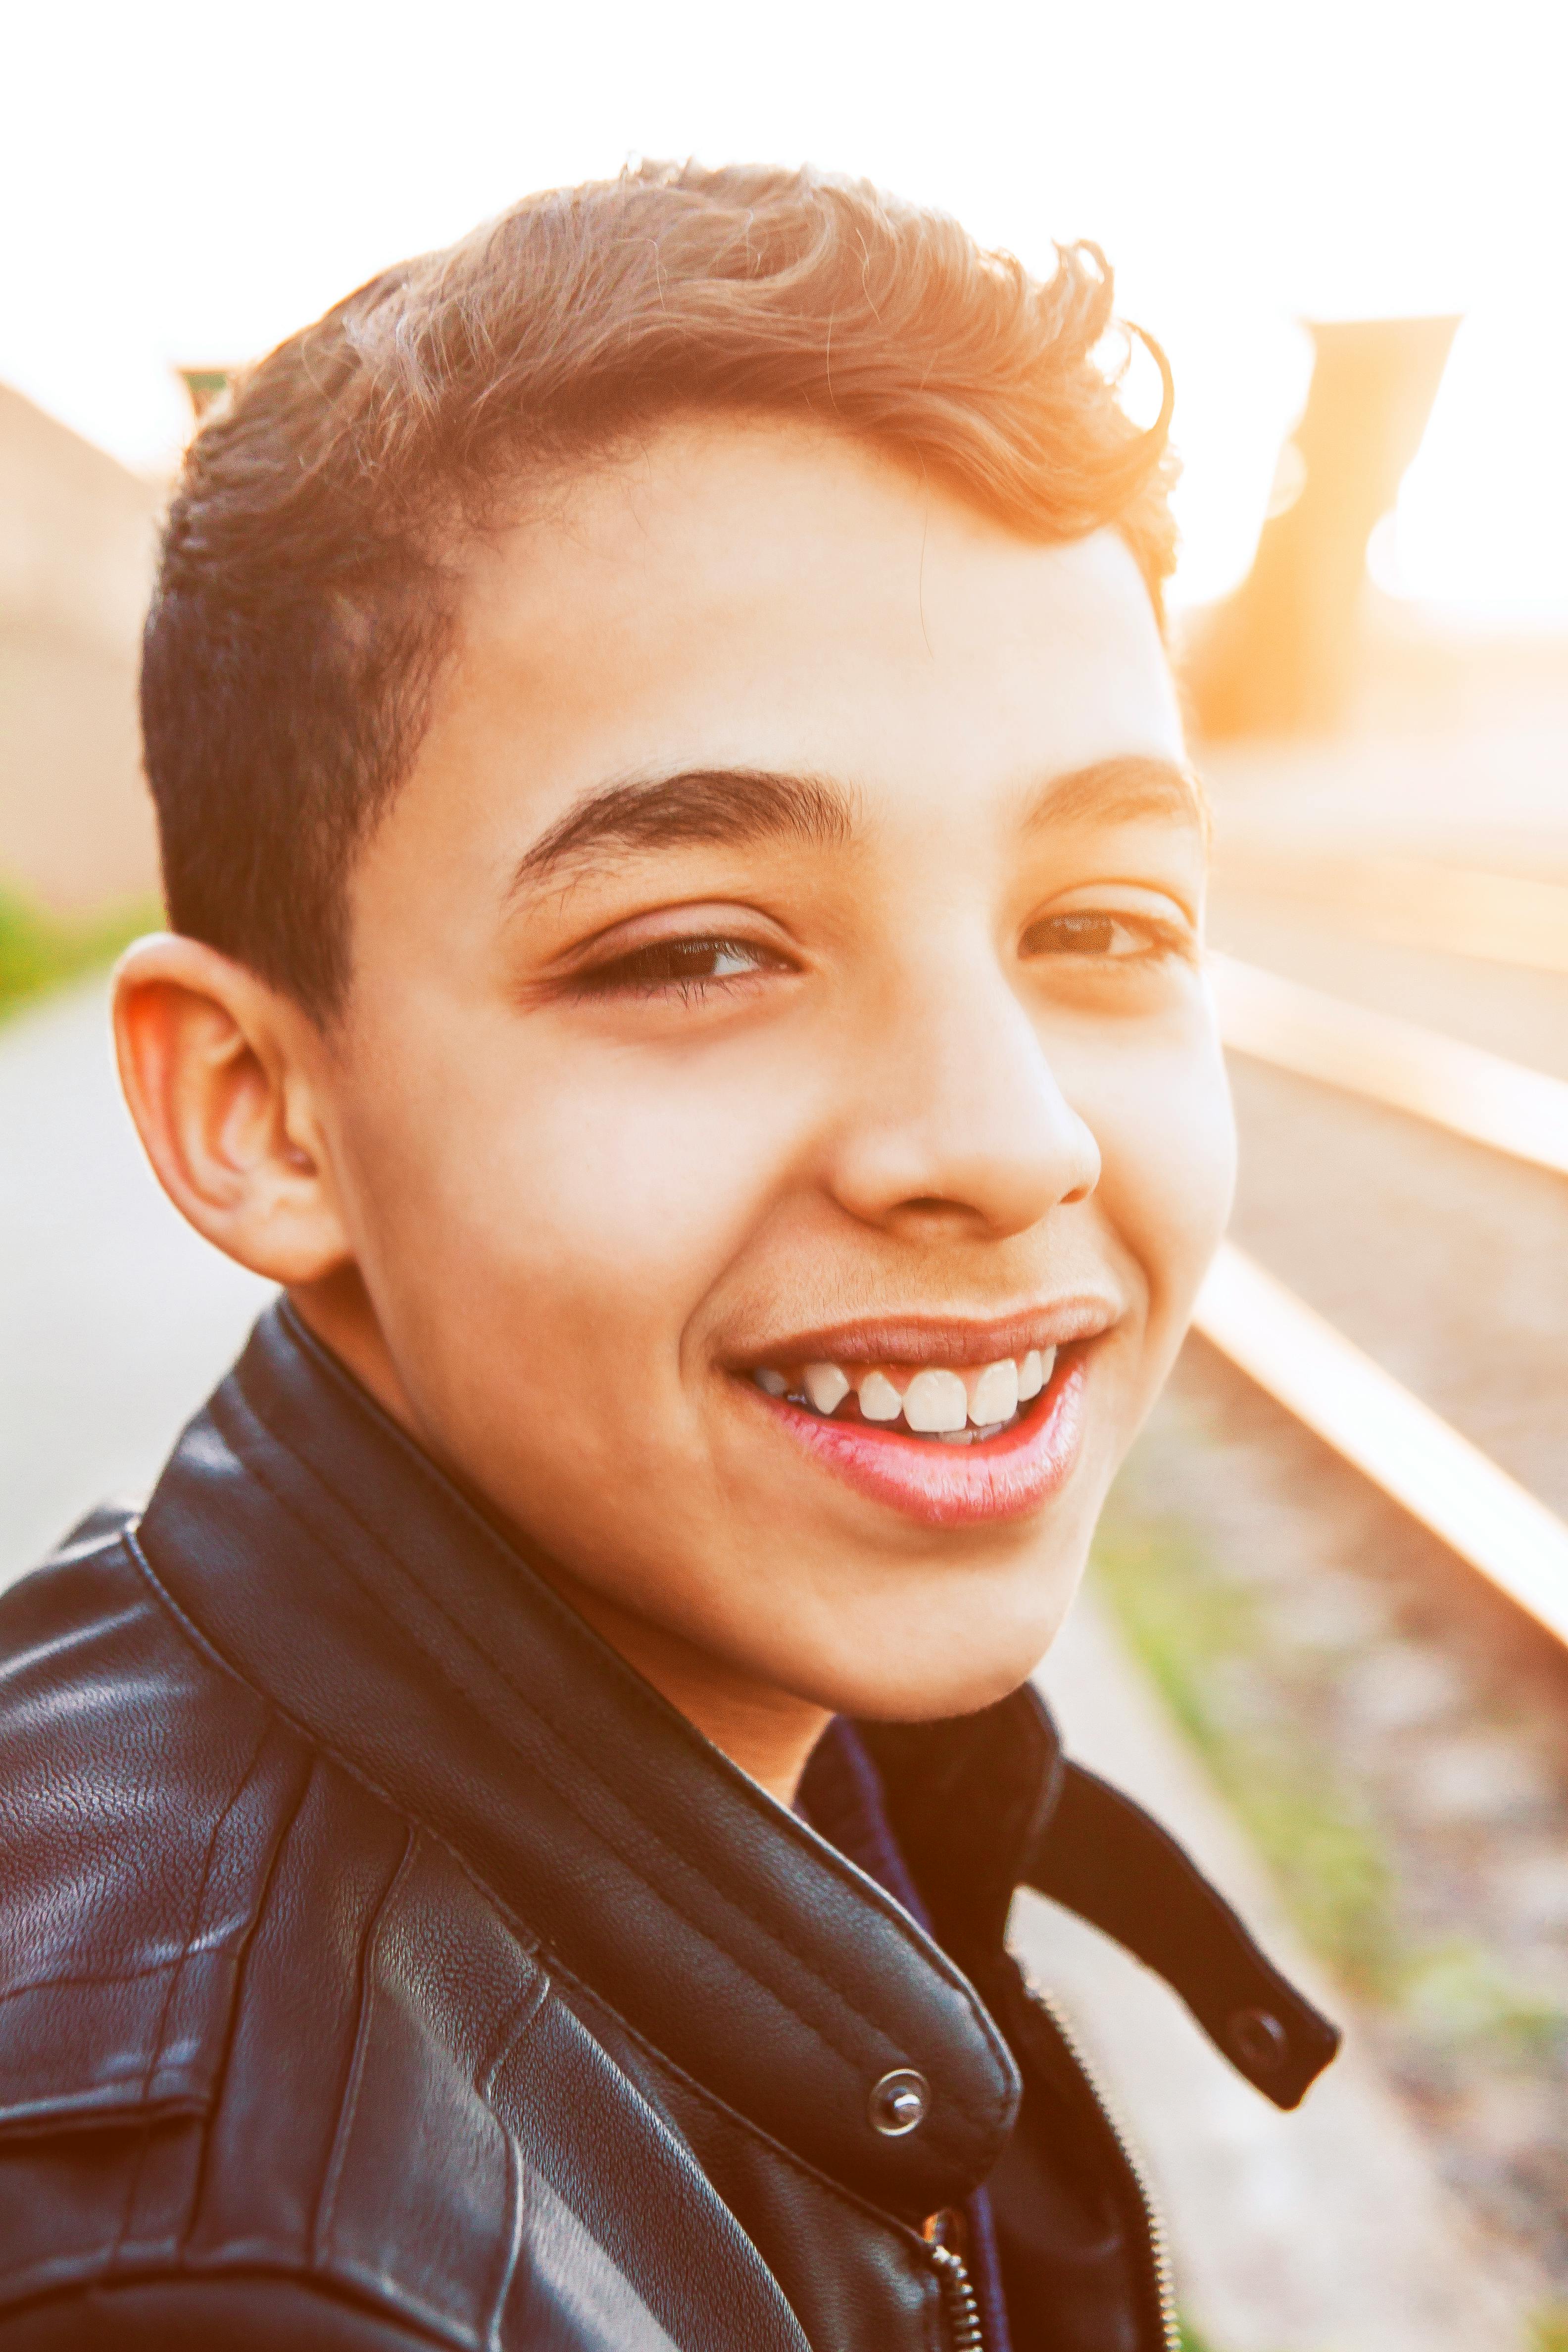 A happy teenage boy smiling | Source: Pexels